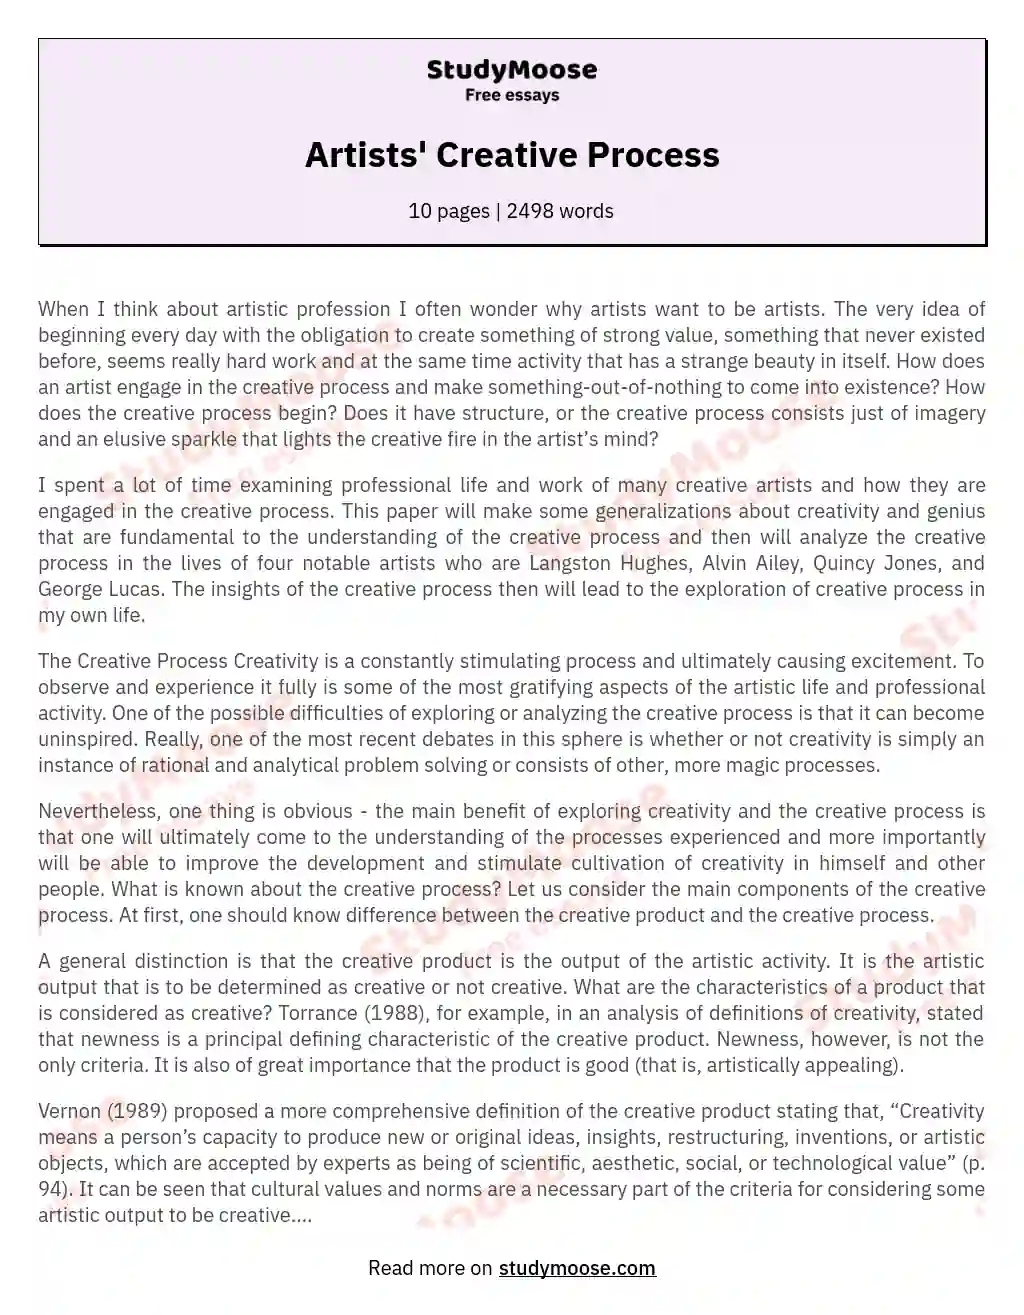 Artists' Creative Process essay